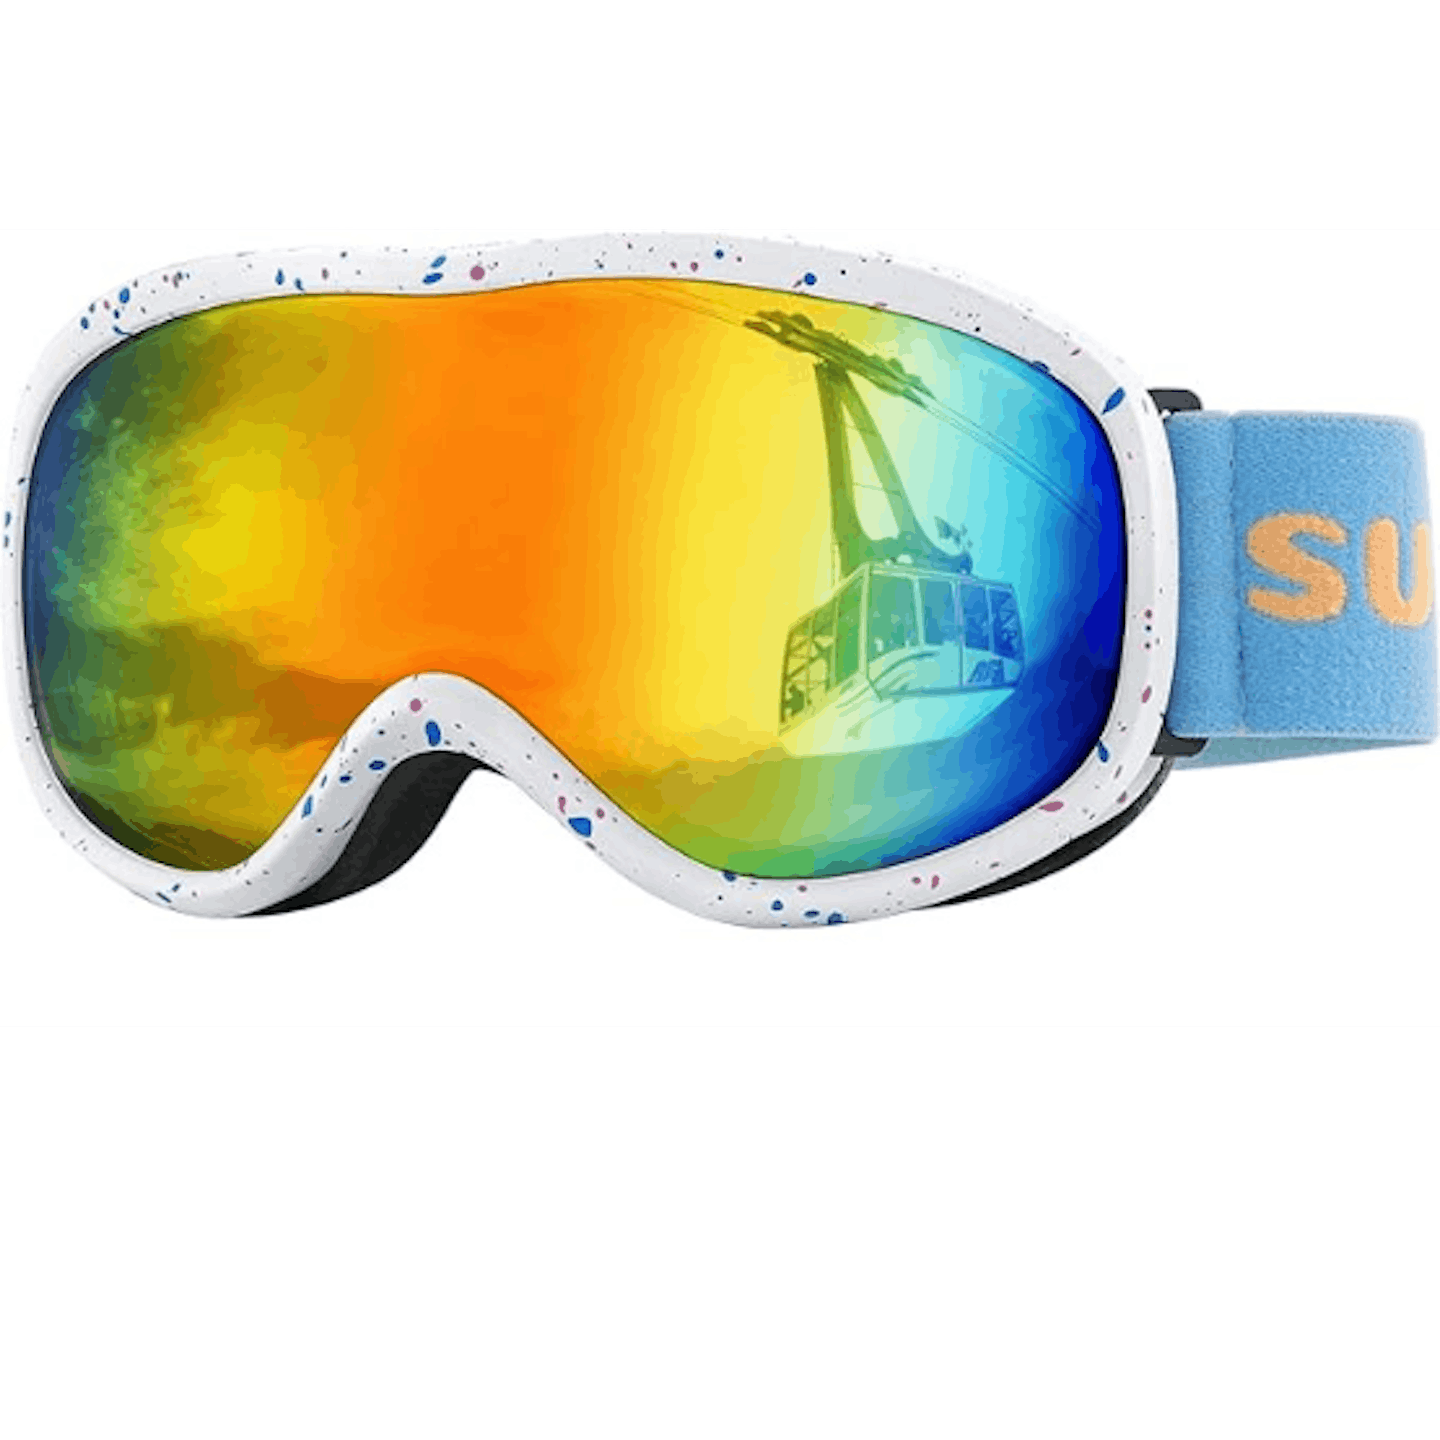 Supertrip ski goggles